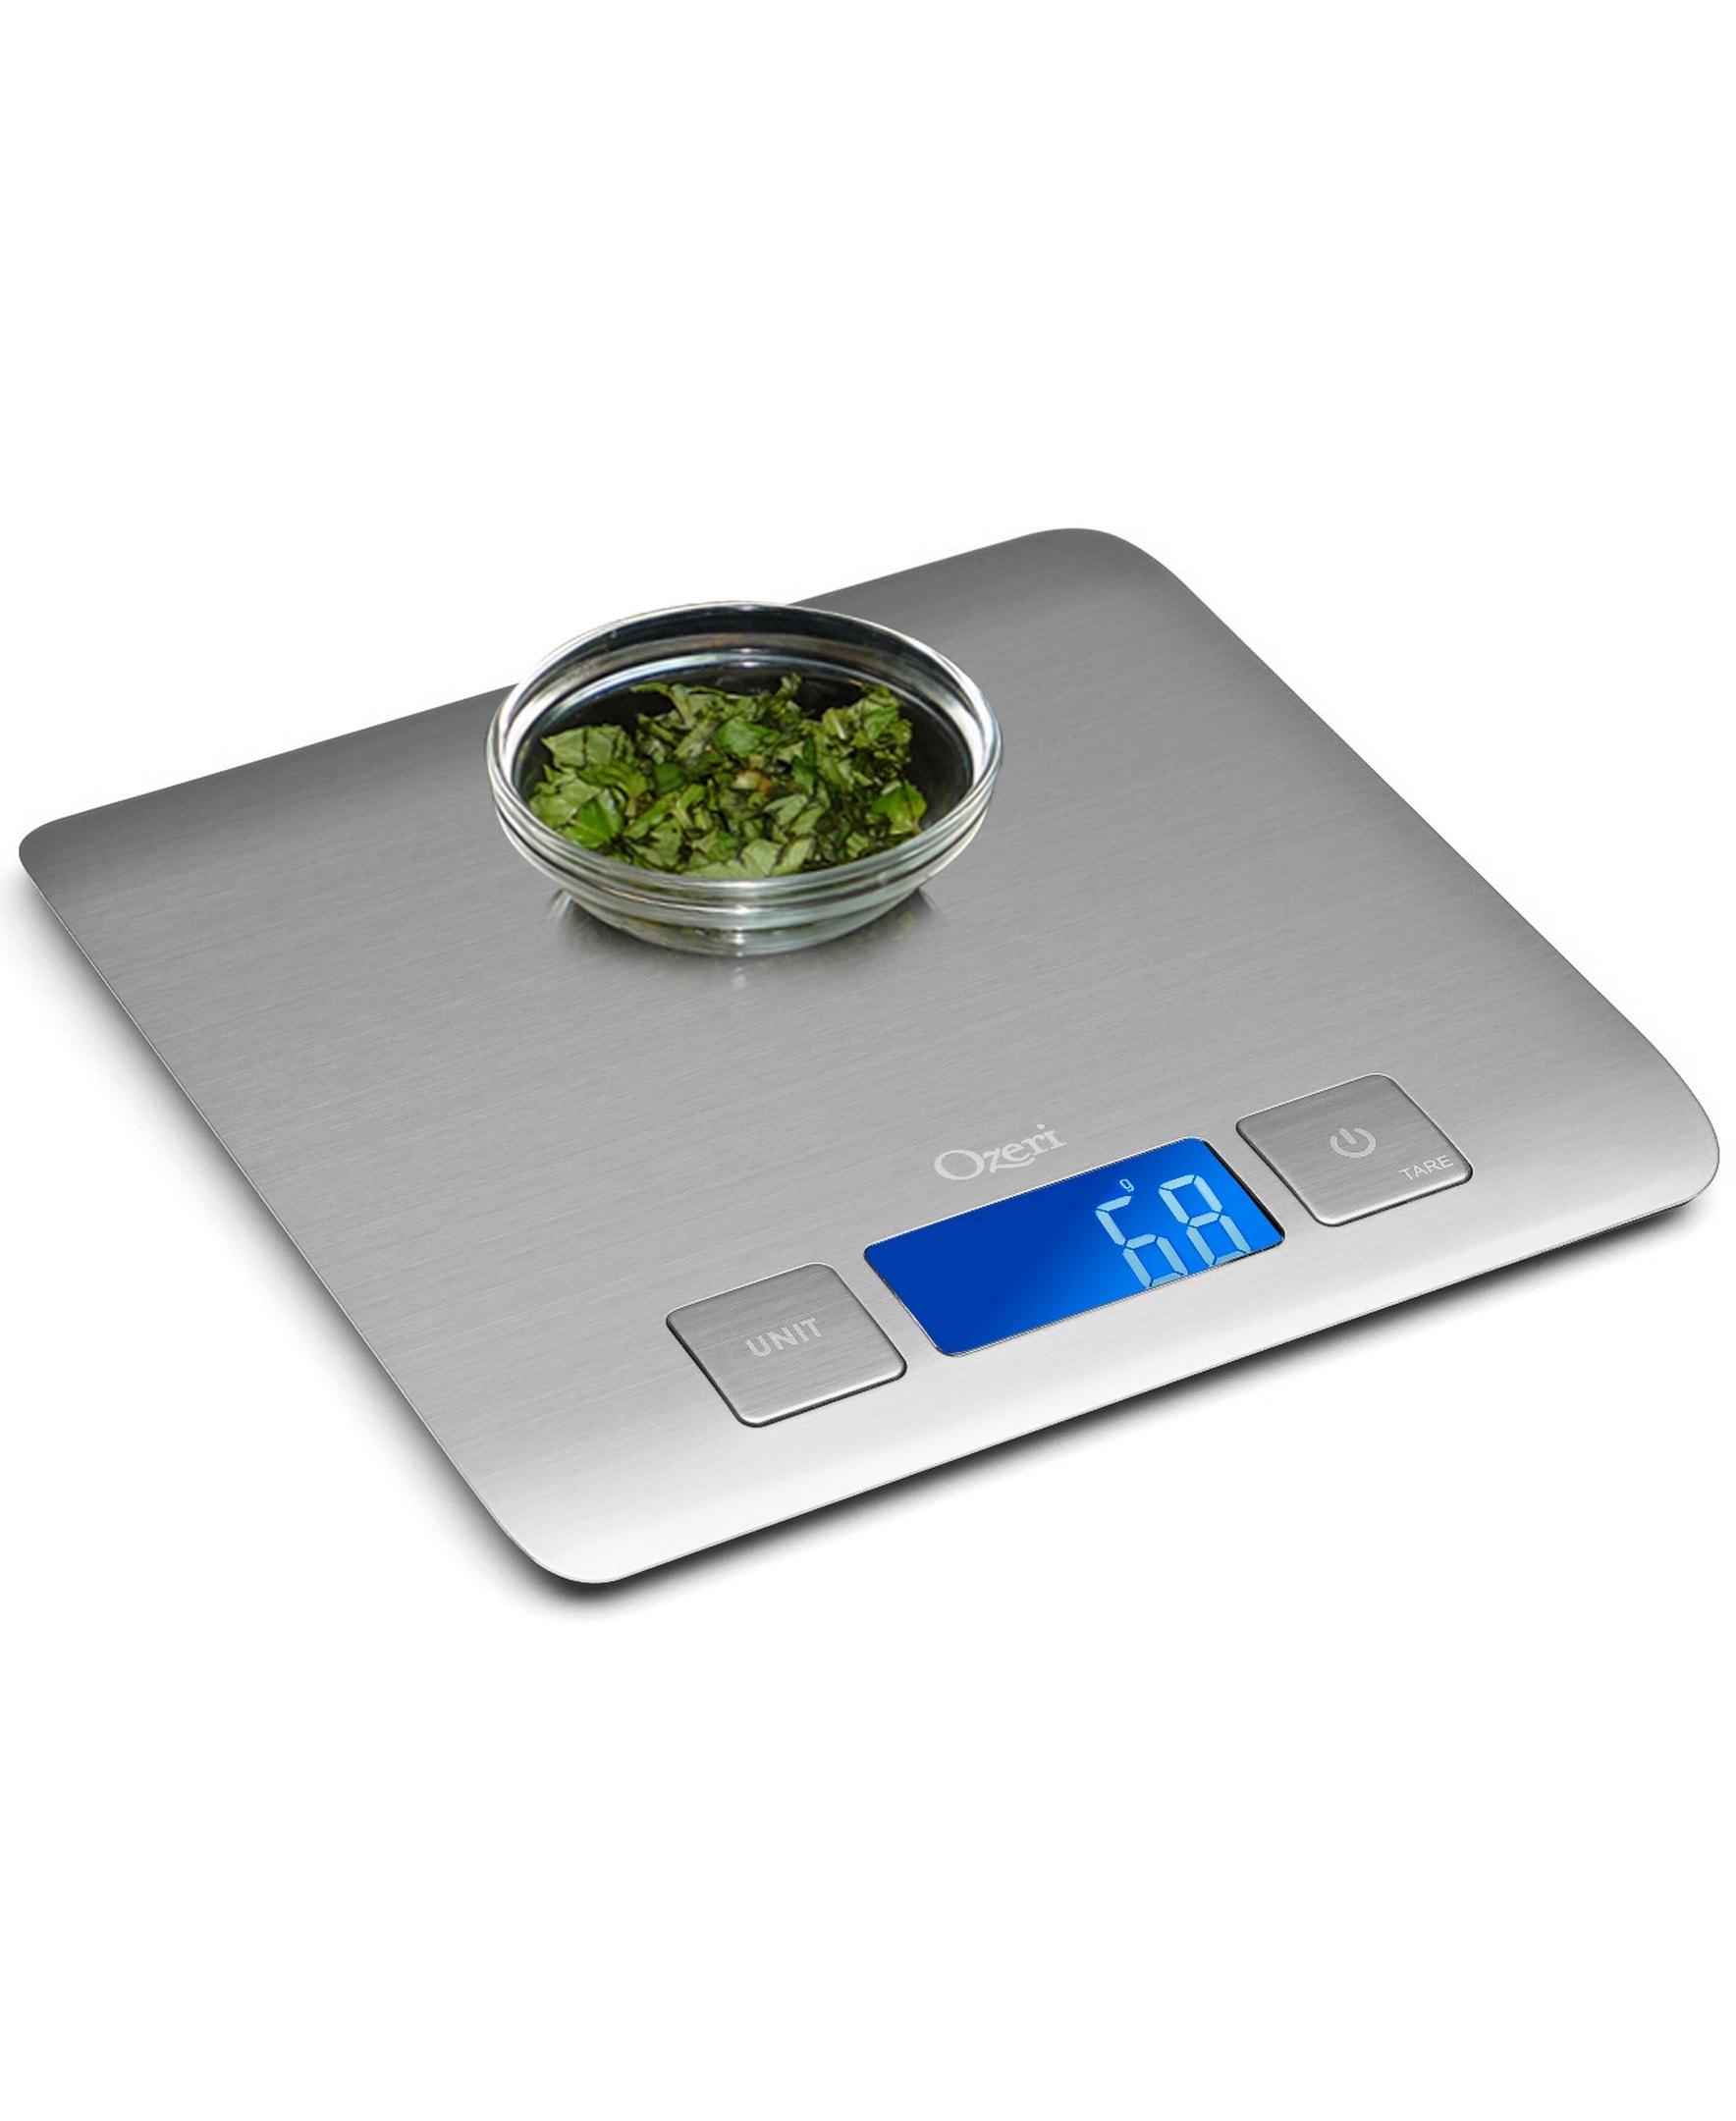  Ozeri Pro Digital Kitchen Food Scale, 0.05 oz to 12 lbs (1 gram  to 5.4 kg): Baking Scale: Home & Kitchen